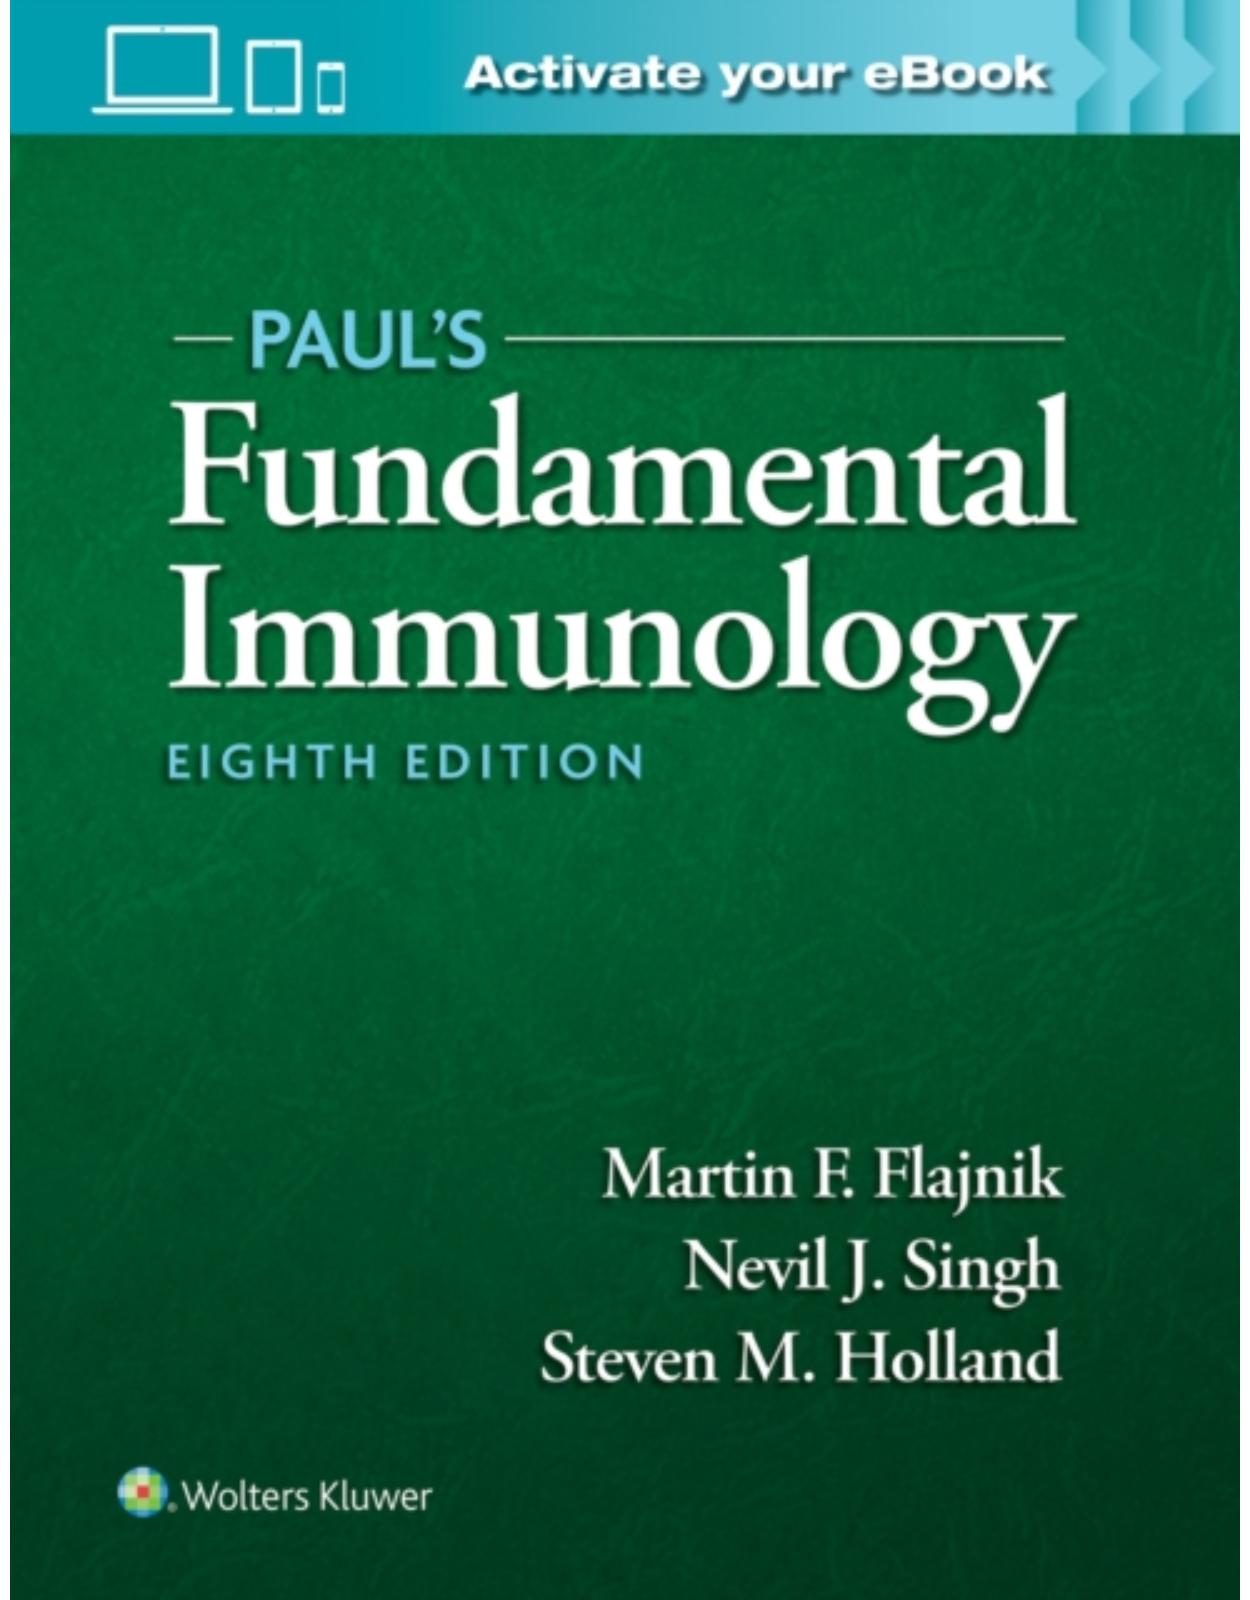 Paul's Fundamental Immunology